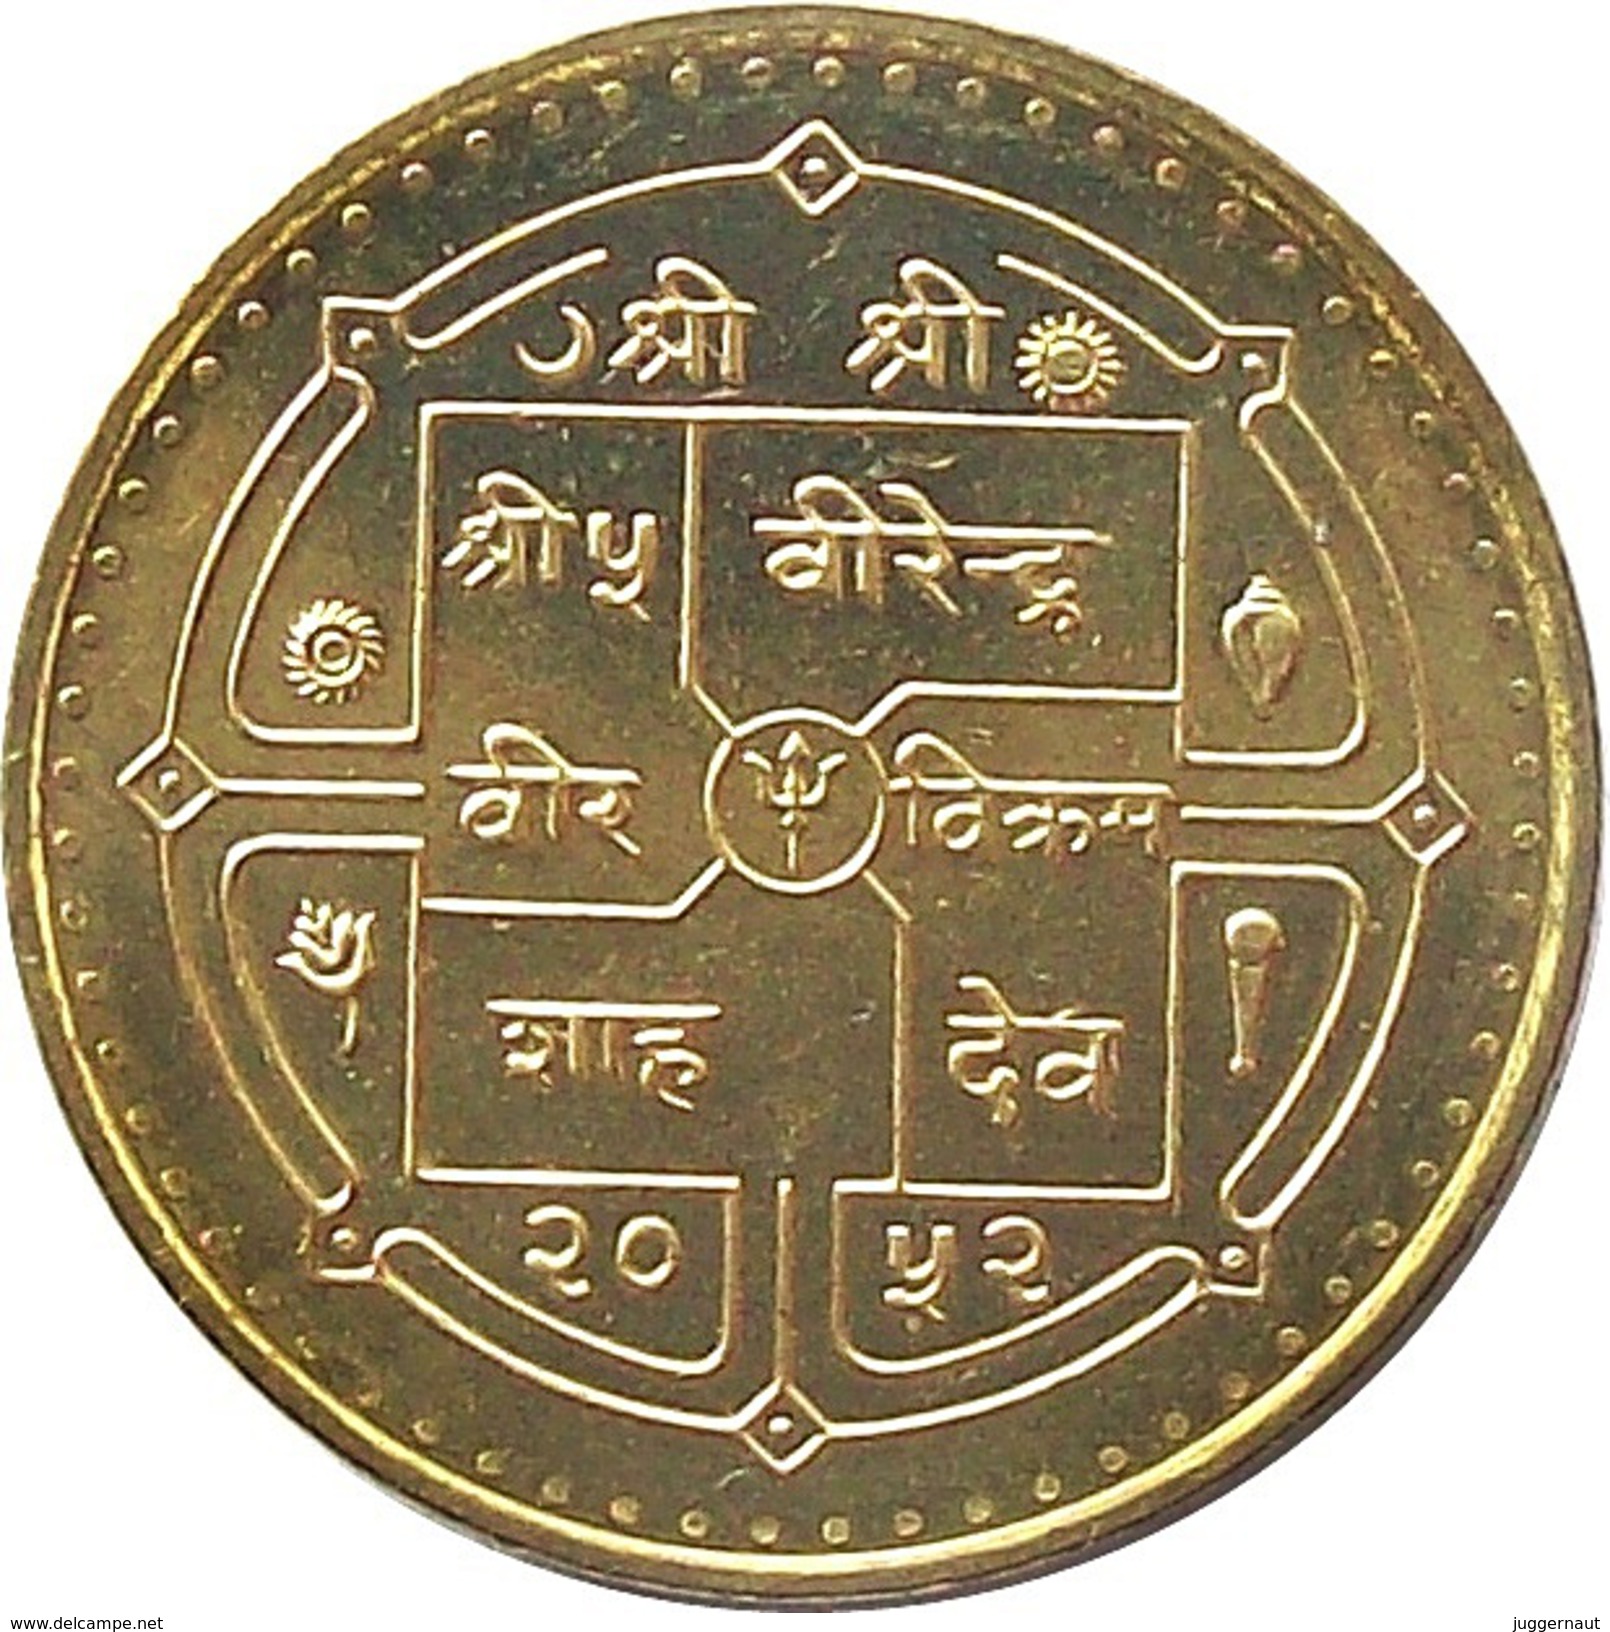 UNITED NATIONS GOLDEN JUBILEE RUPEE 1 BRASS-STEEL COIN NEPAL 1995 KM-1092 UNCIRCULATED UNC - Nepal